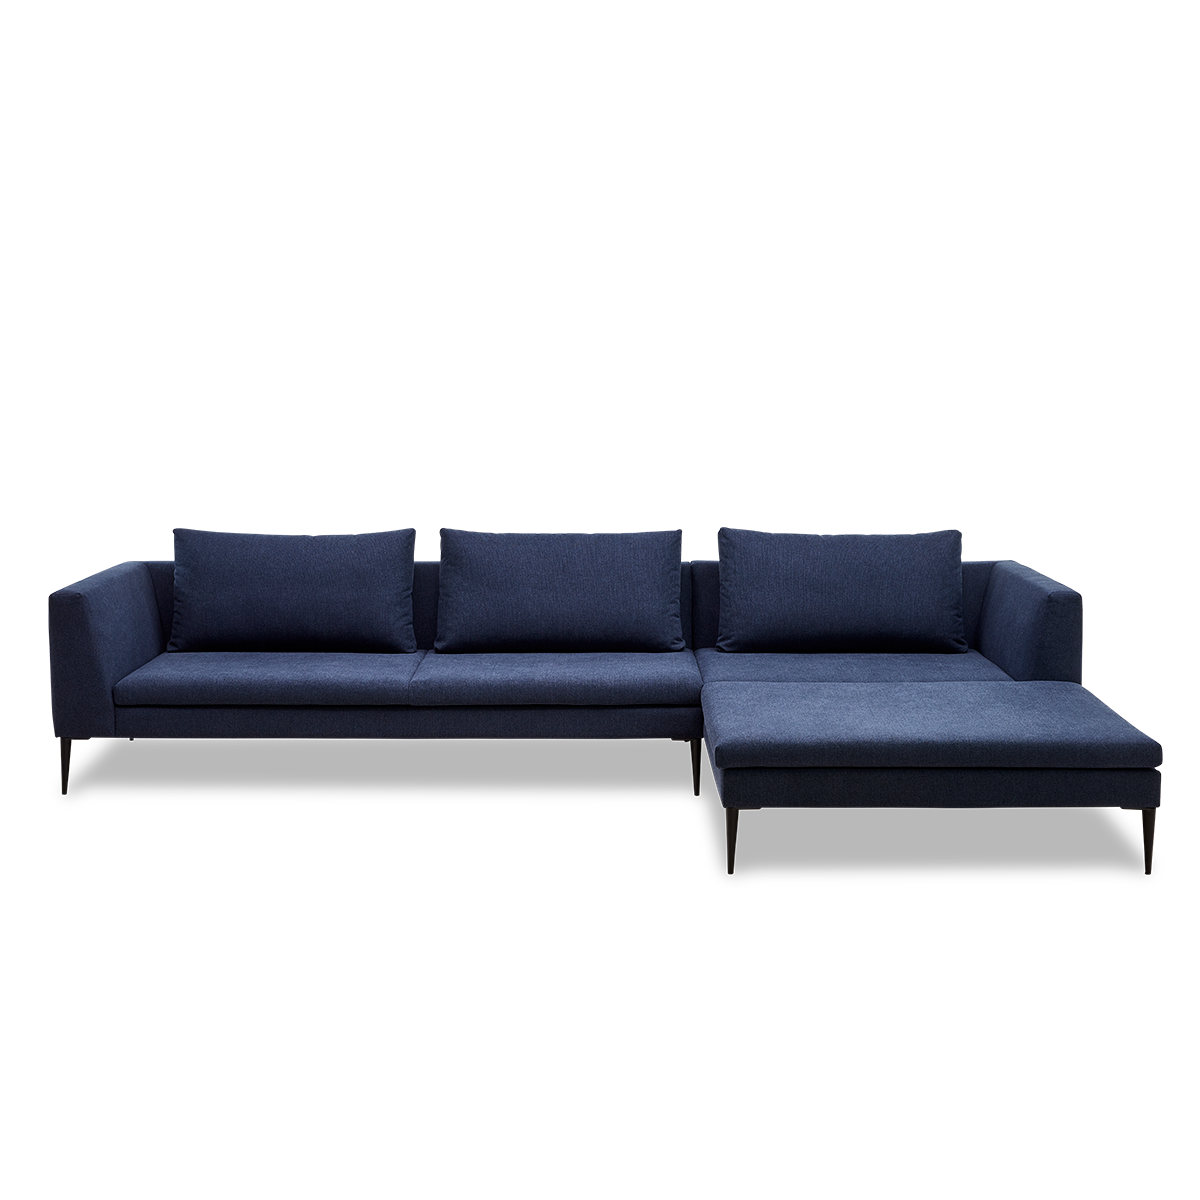 Chili chaiselong sofa fra Kragelund monteret med slidstærkt blåt møbelstof og sorte metalben